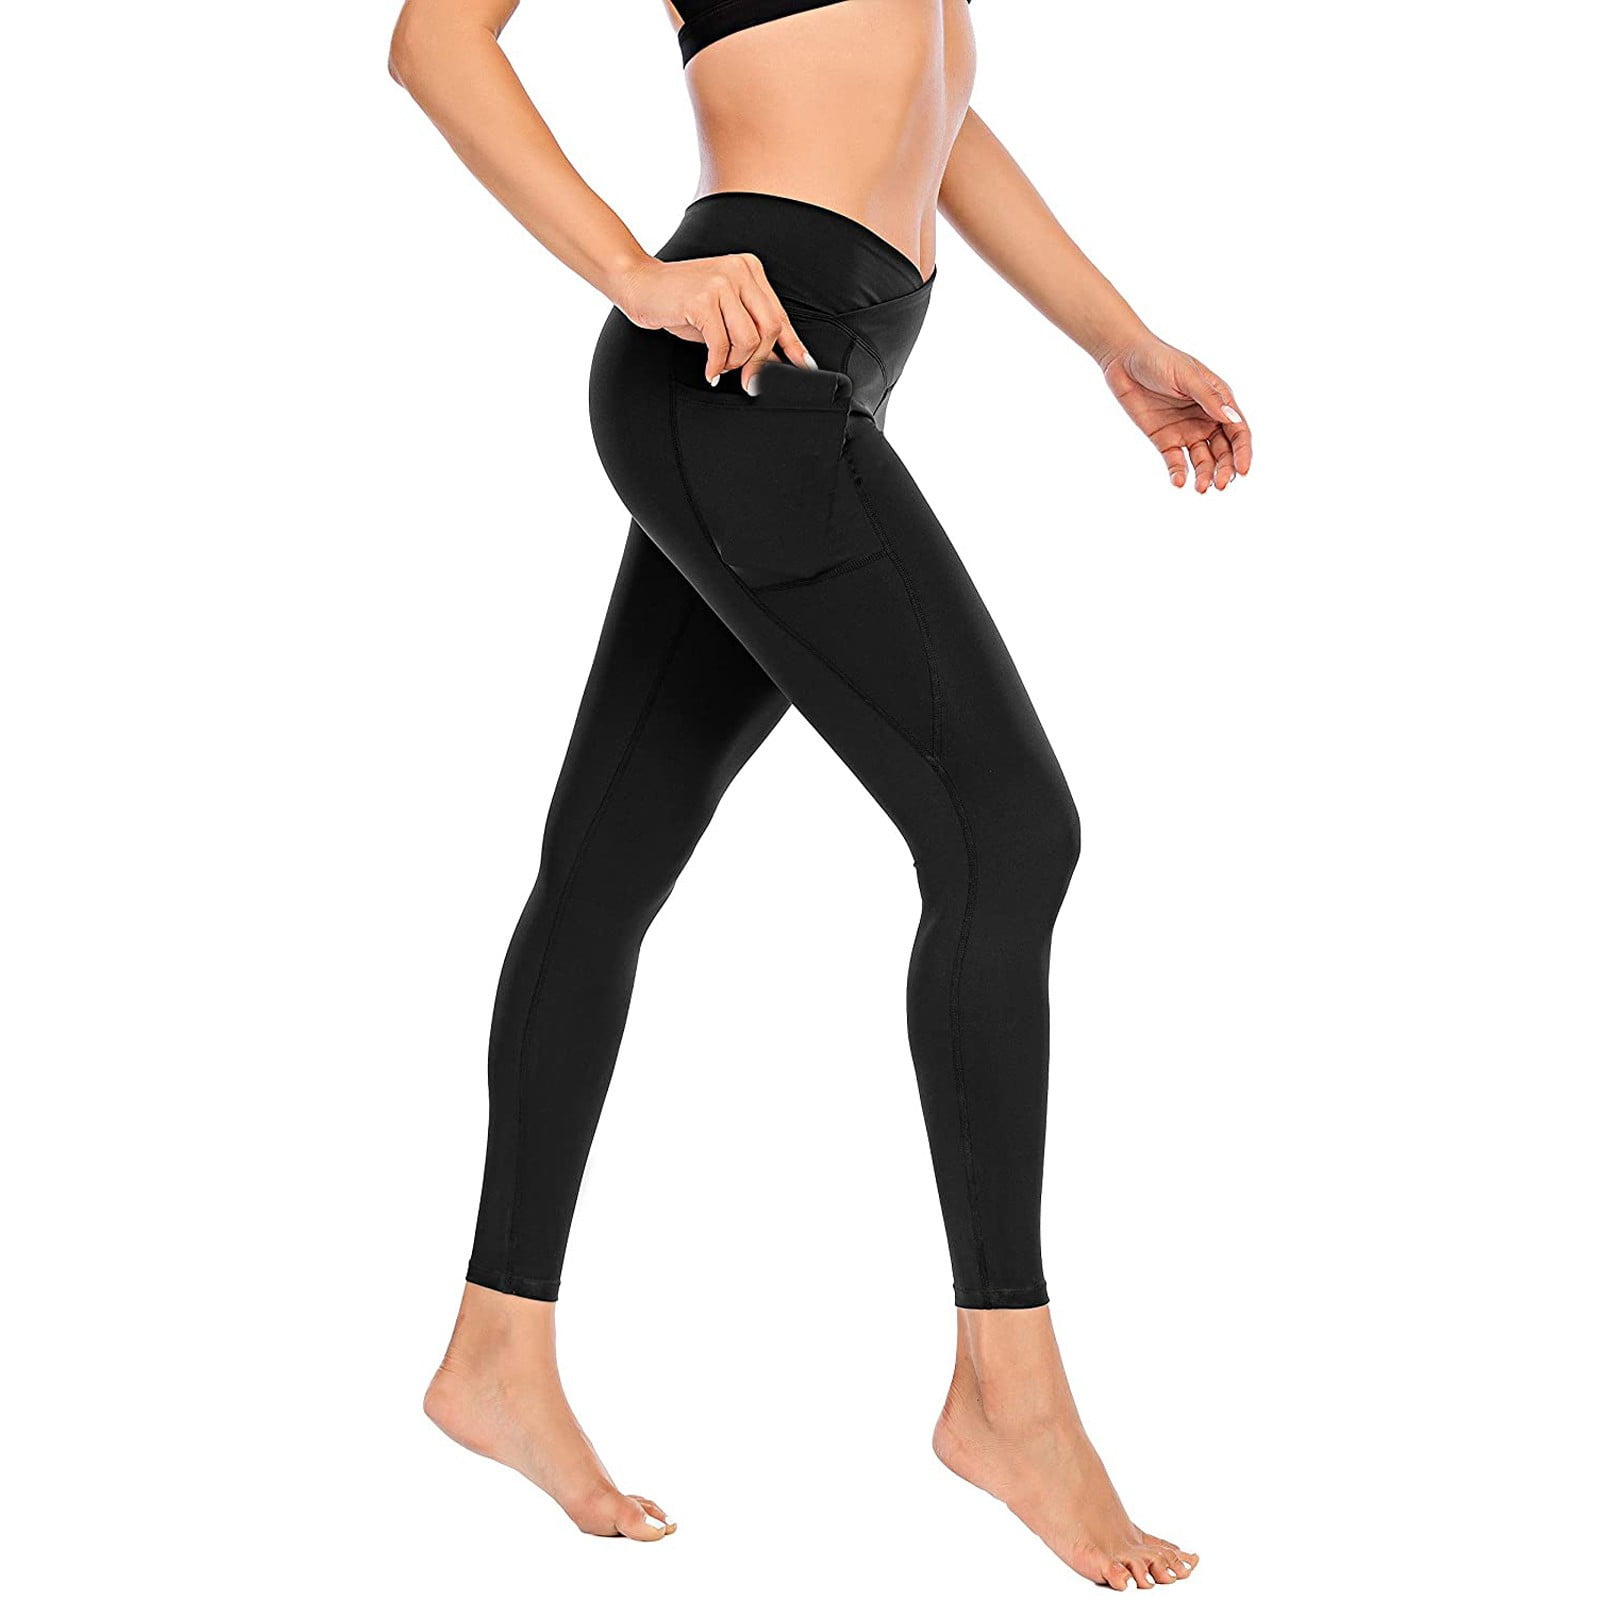 Qxutpo Womens Pants Workout Out Running Leggings Sports Fitness Yoga ...